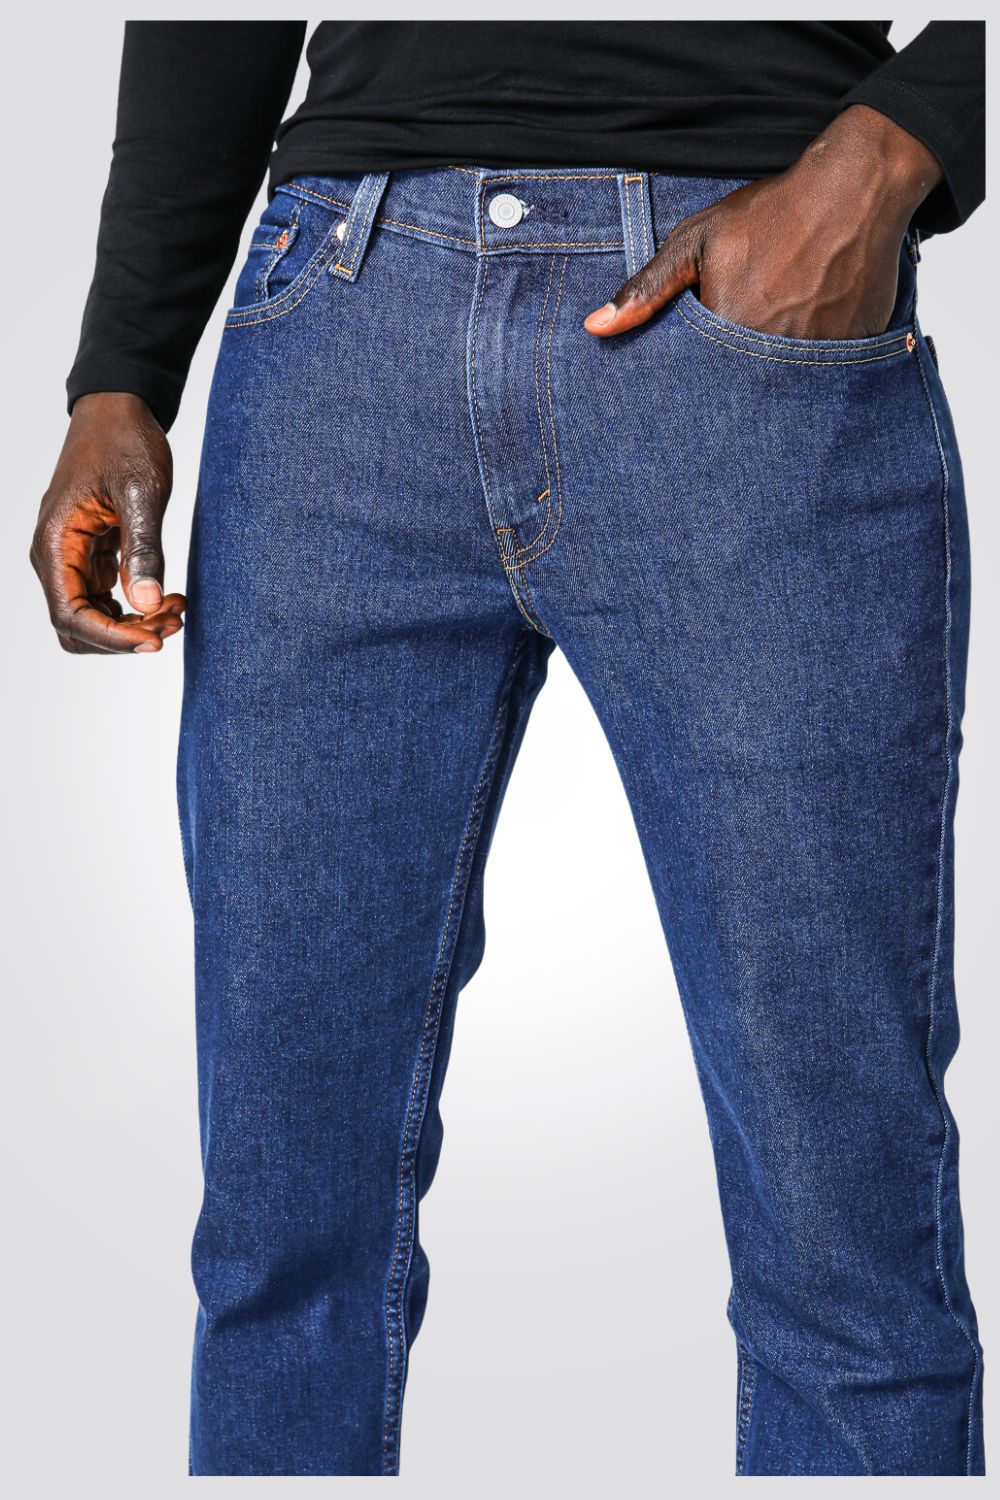 LEVI'S - ג'ינס לגברים INDIGO-POCKETS בצבע כחול כהה - MASHBIR//365